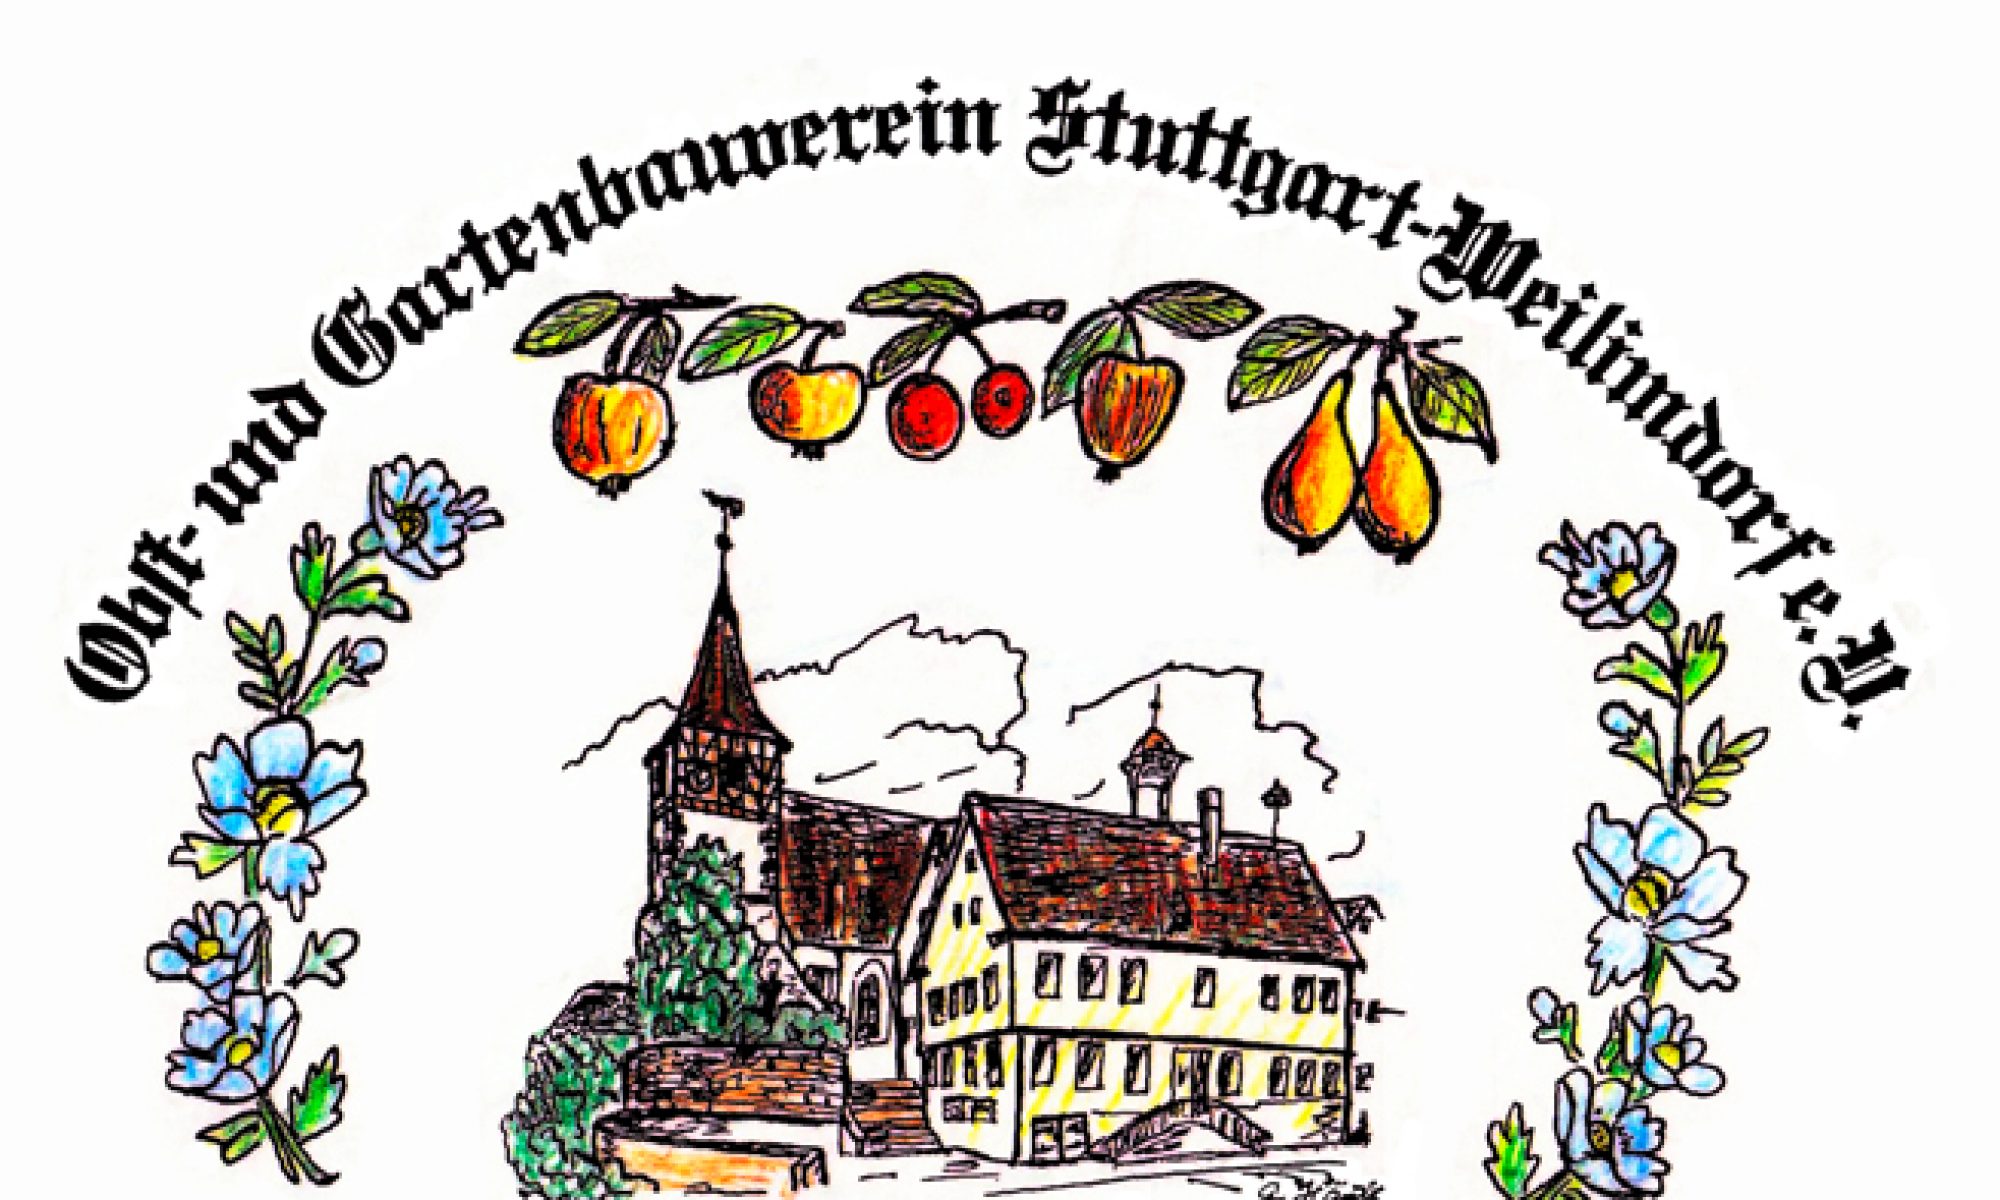 You are currently viewing Jahreshauptversammlung 2023